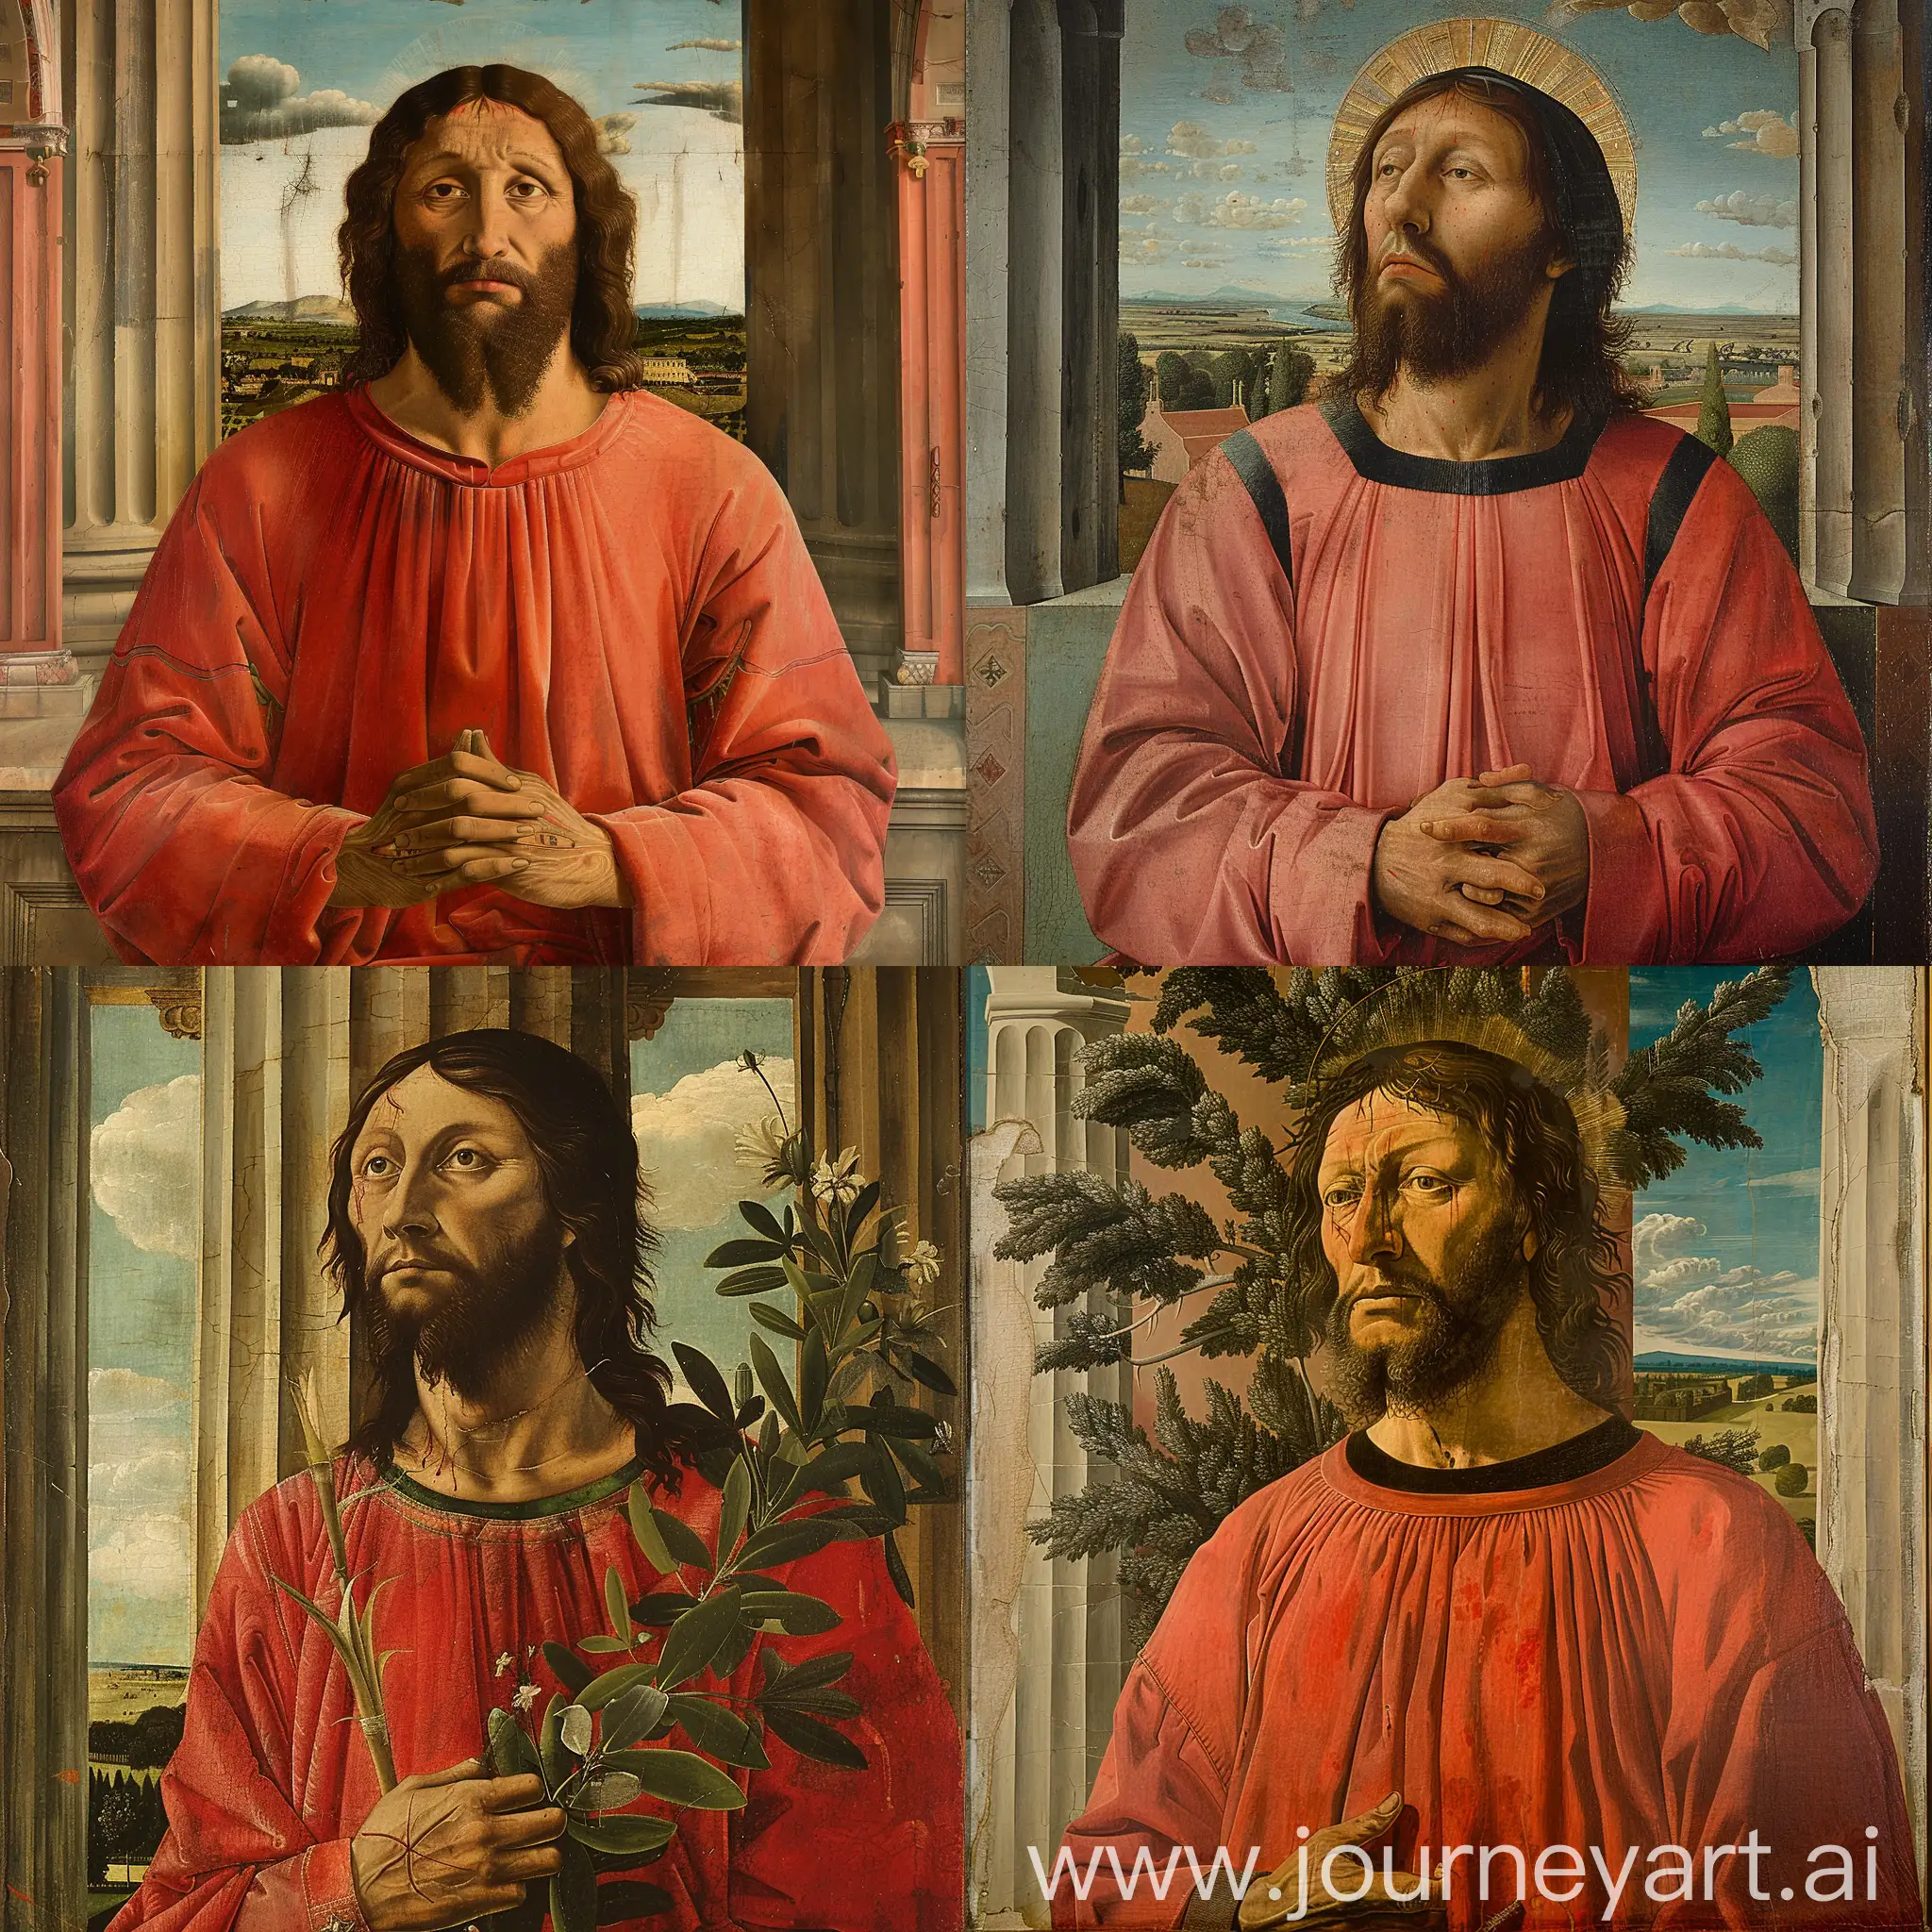 Generate a Painting with jesus christ painted in Pierro de la Francesca style